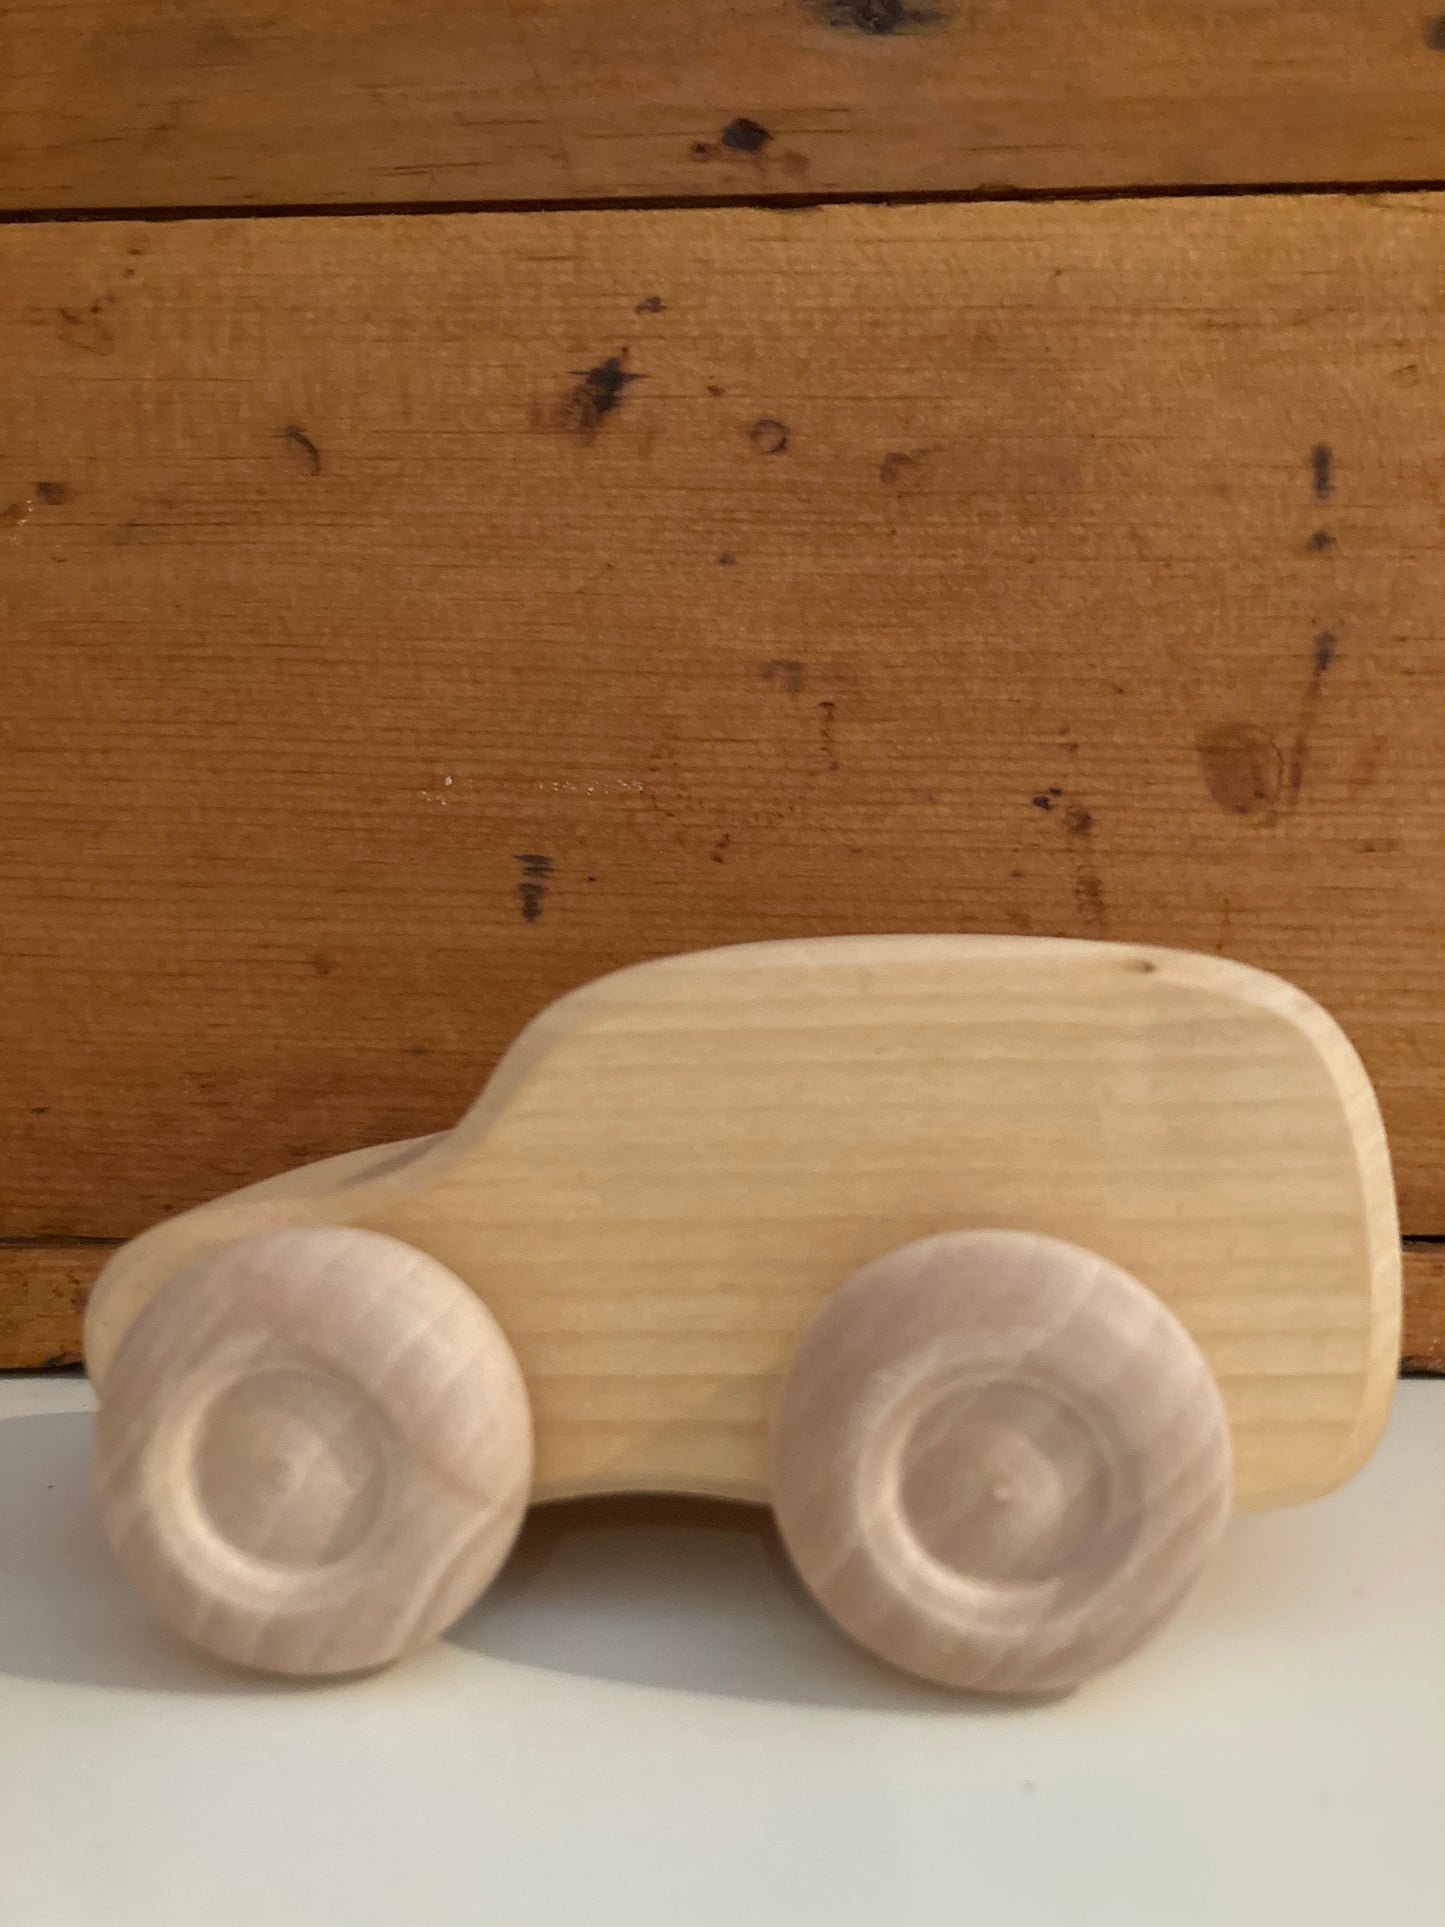 Wooden Toy - Grimm's LITTLE CAR